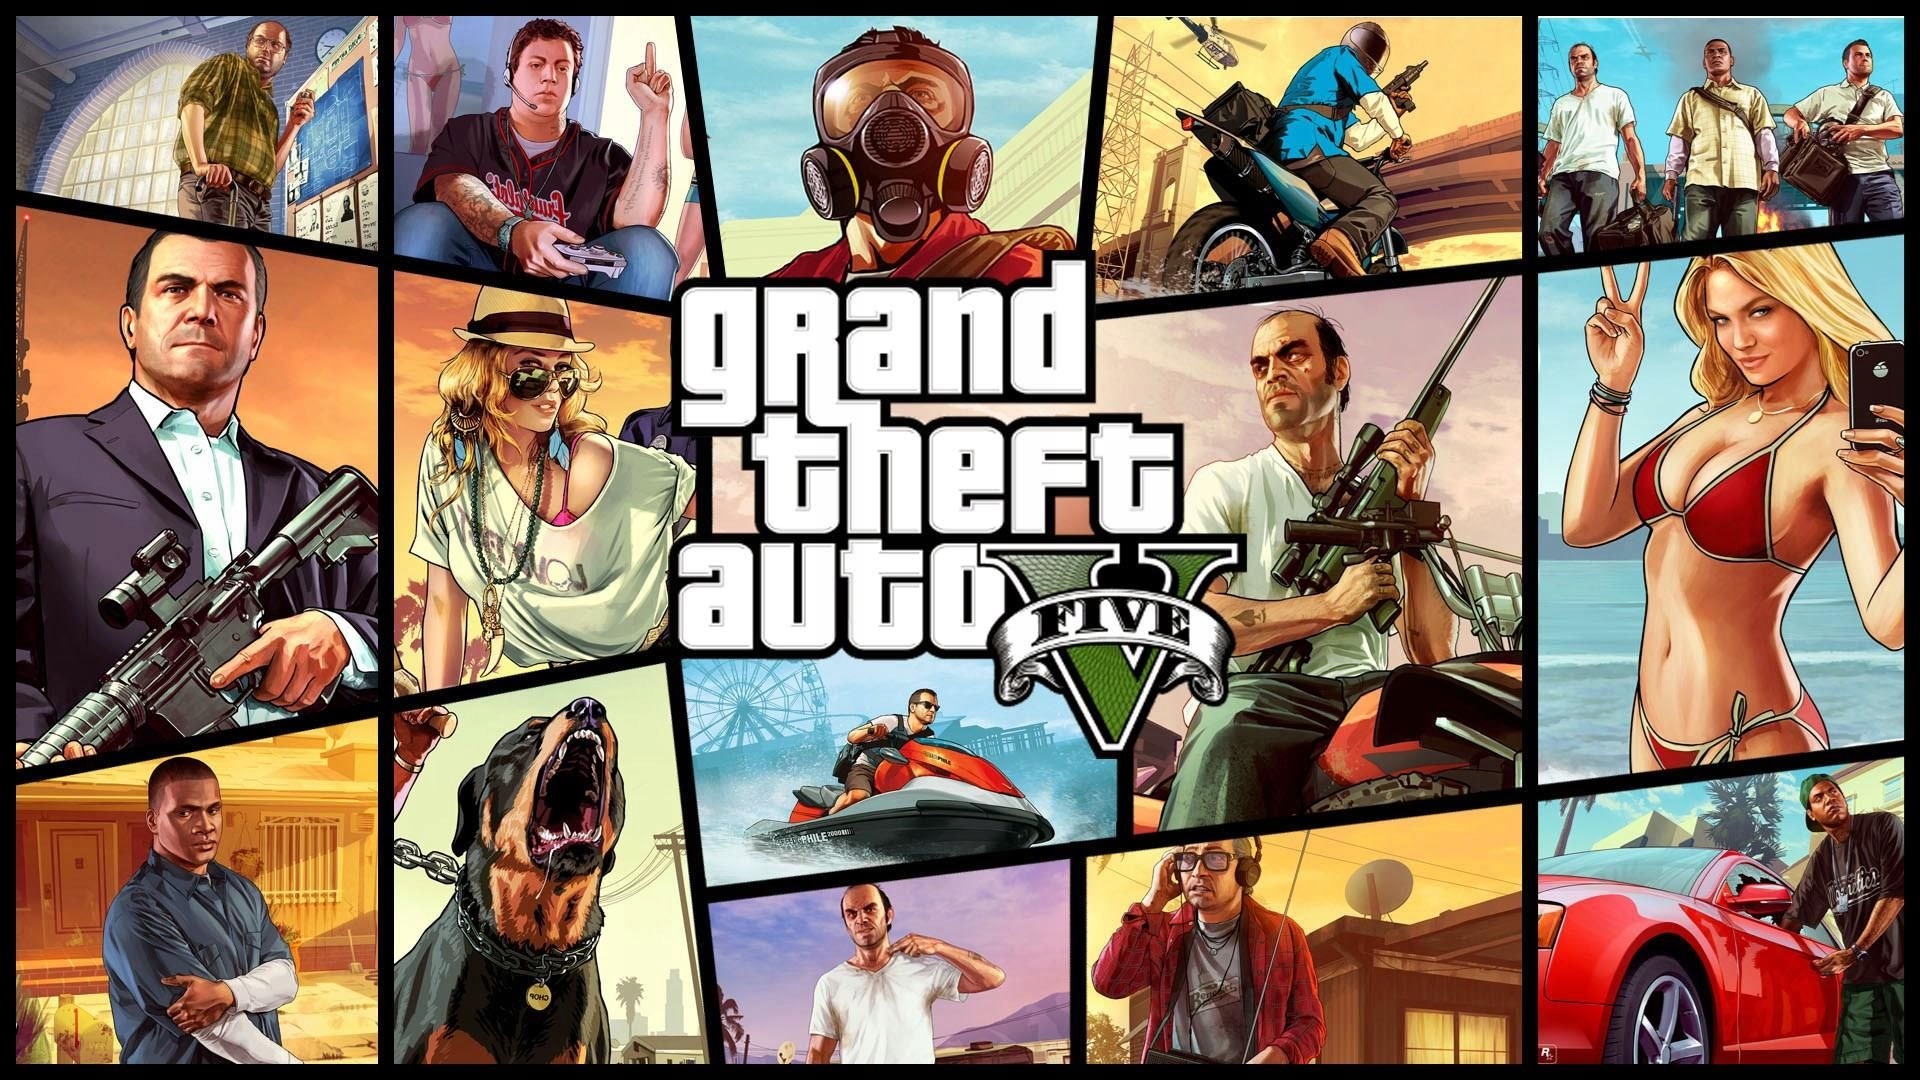 GTA 5 (Grand Theft Auto V): Guia completo : GTA 5 (Grand Theft Auto V):  Guia completo